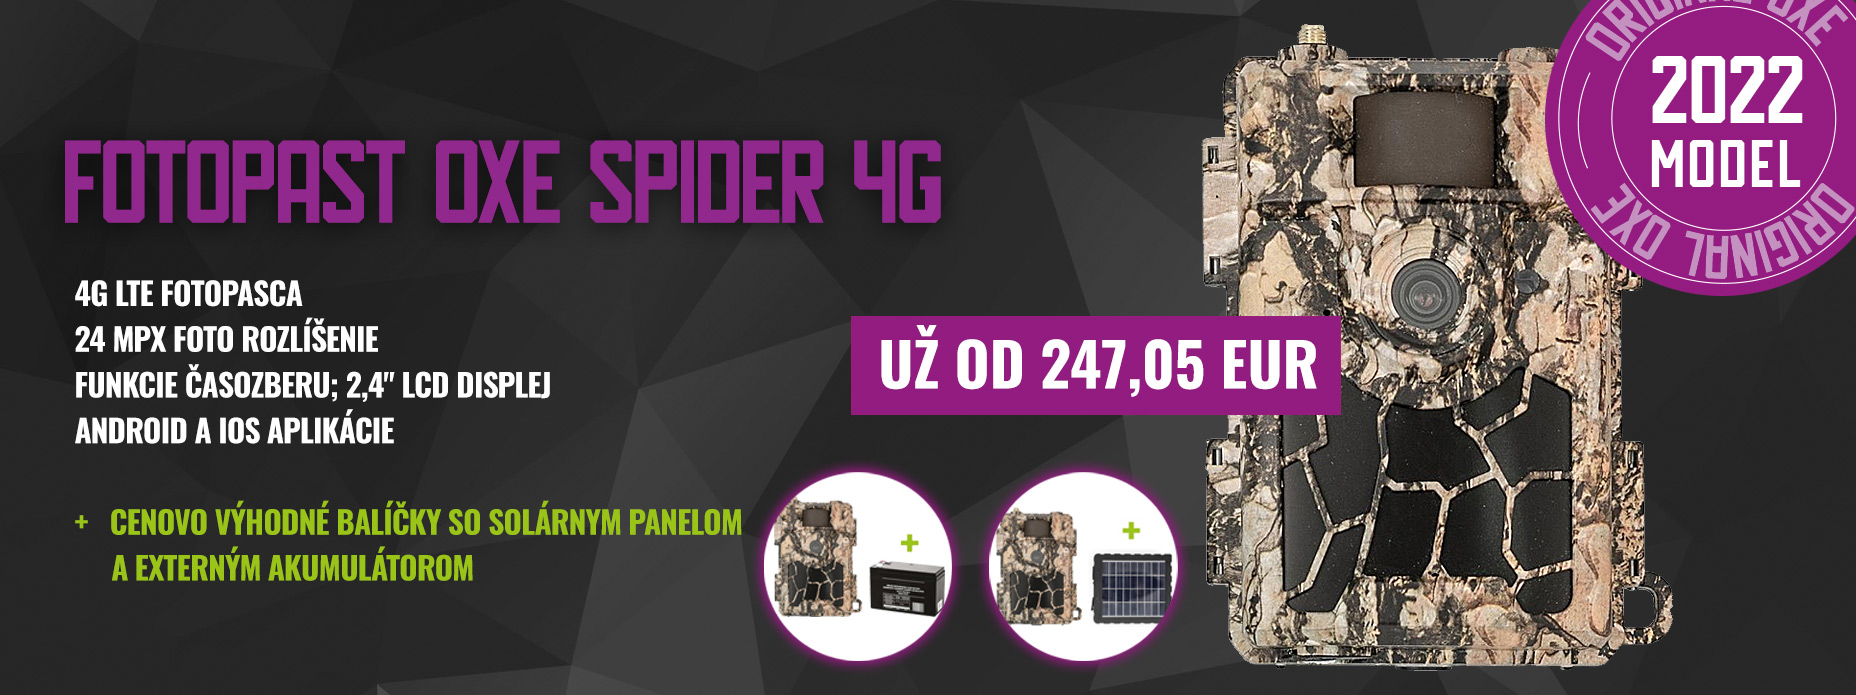 Fotopasca OXE Spider 4G